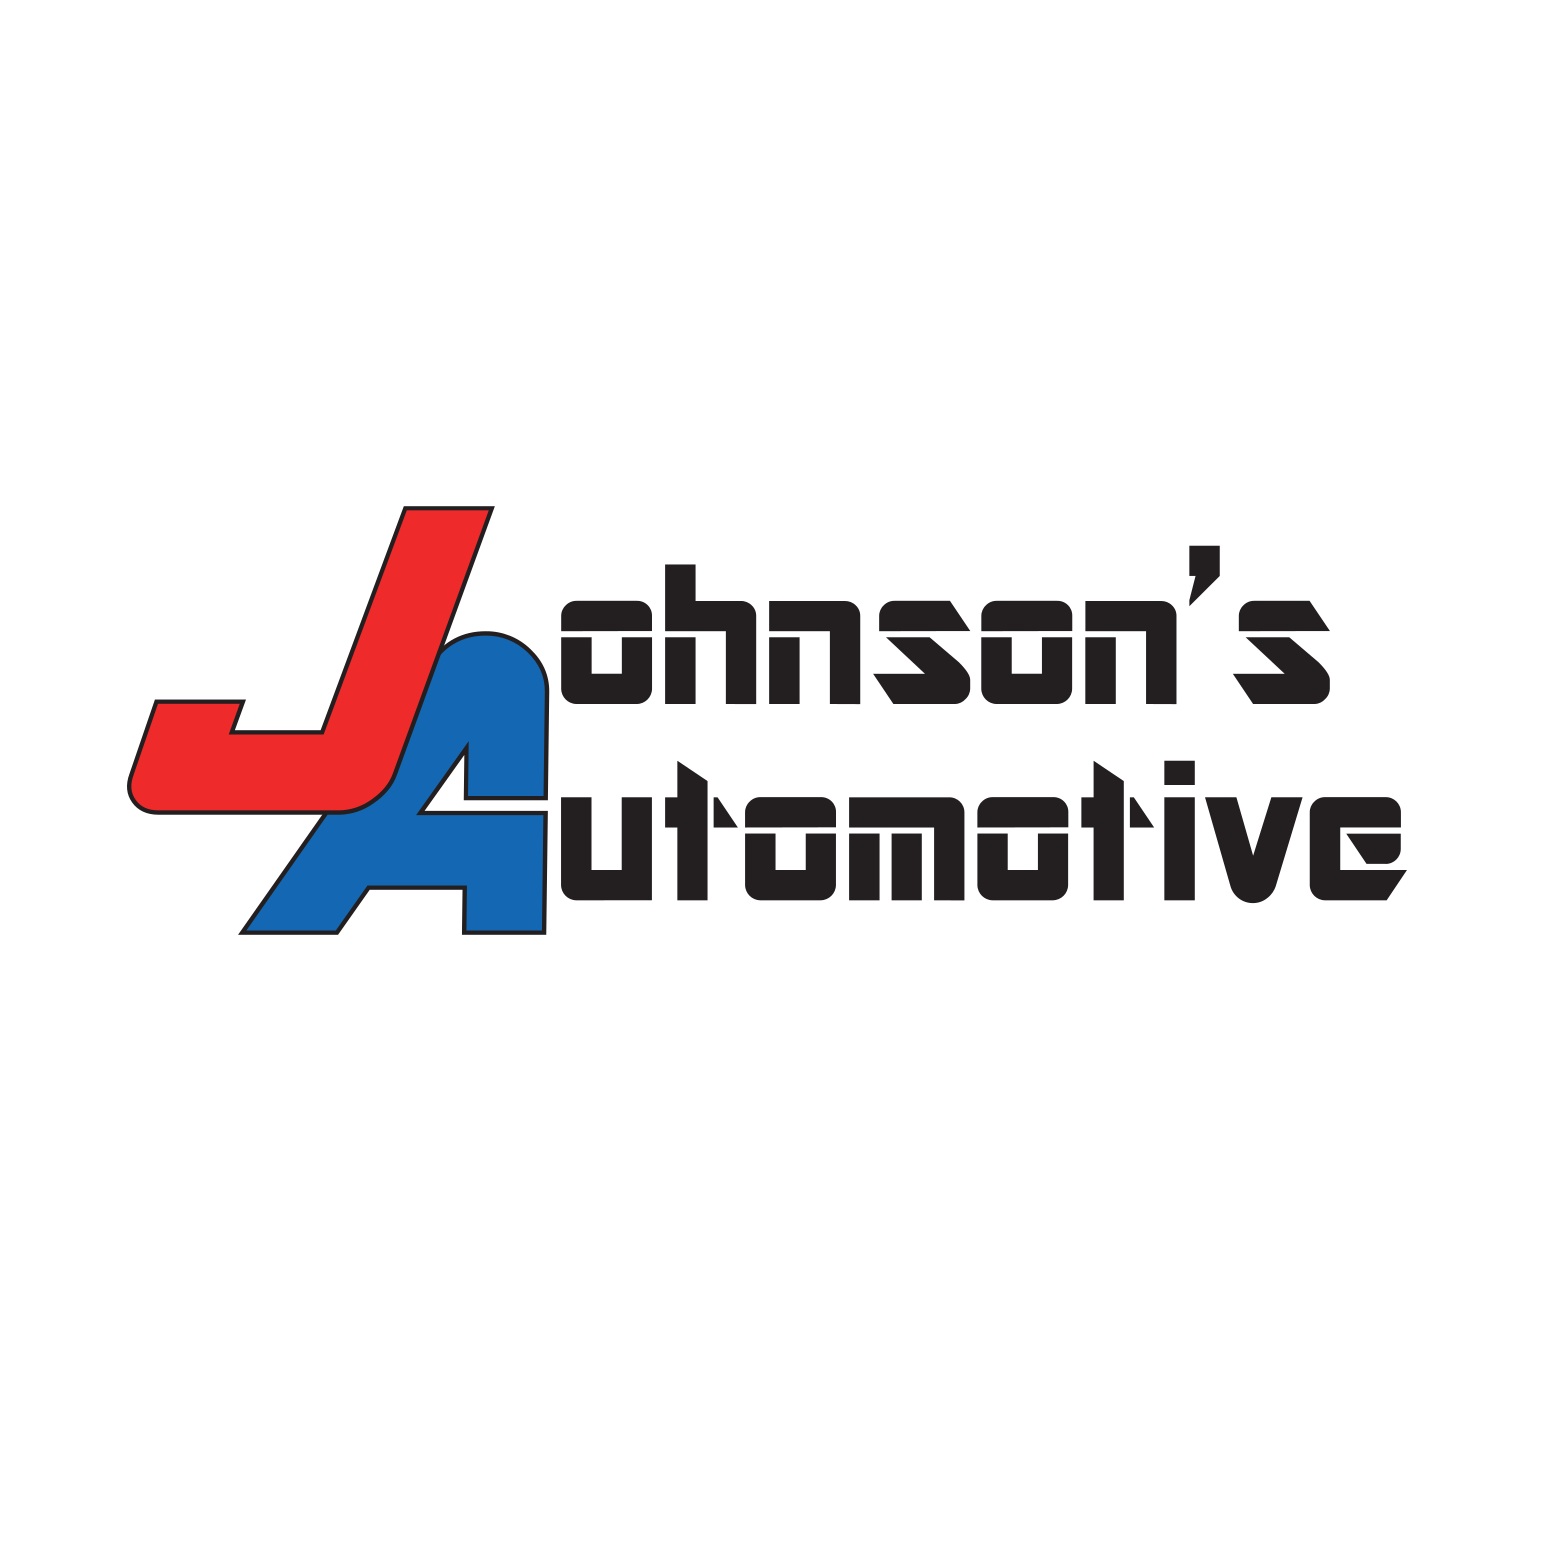 Johnson's Automotive Repair